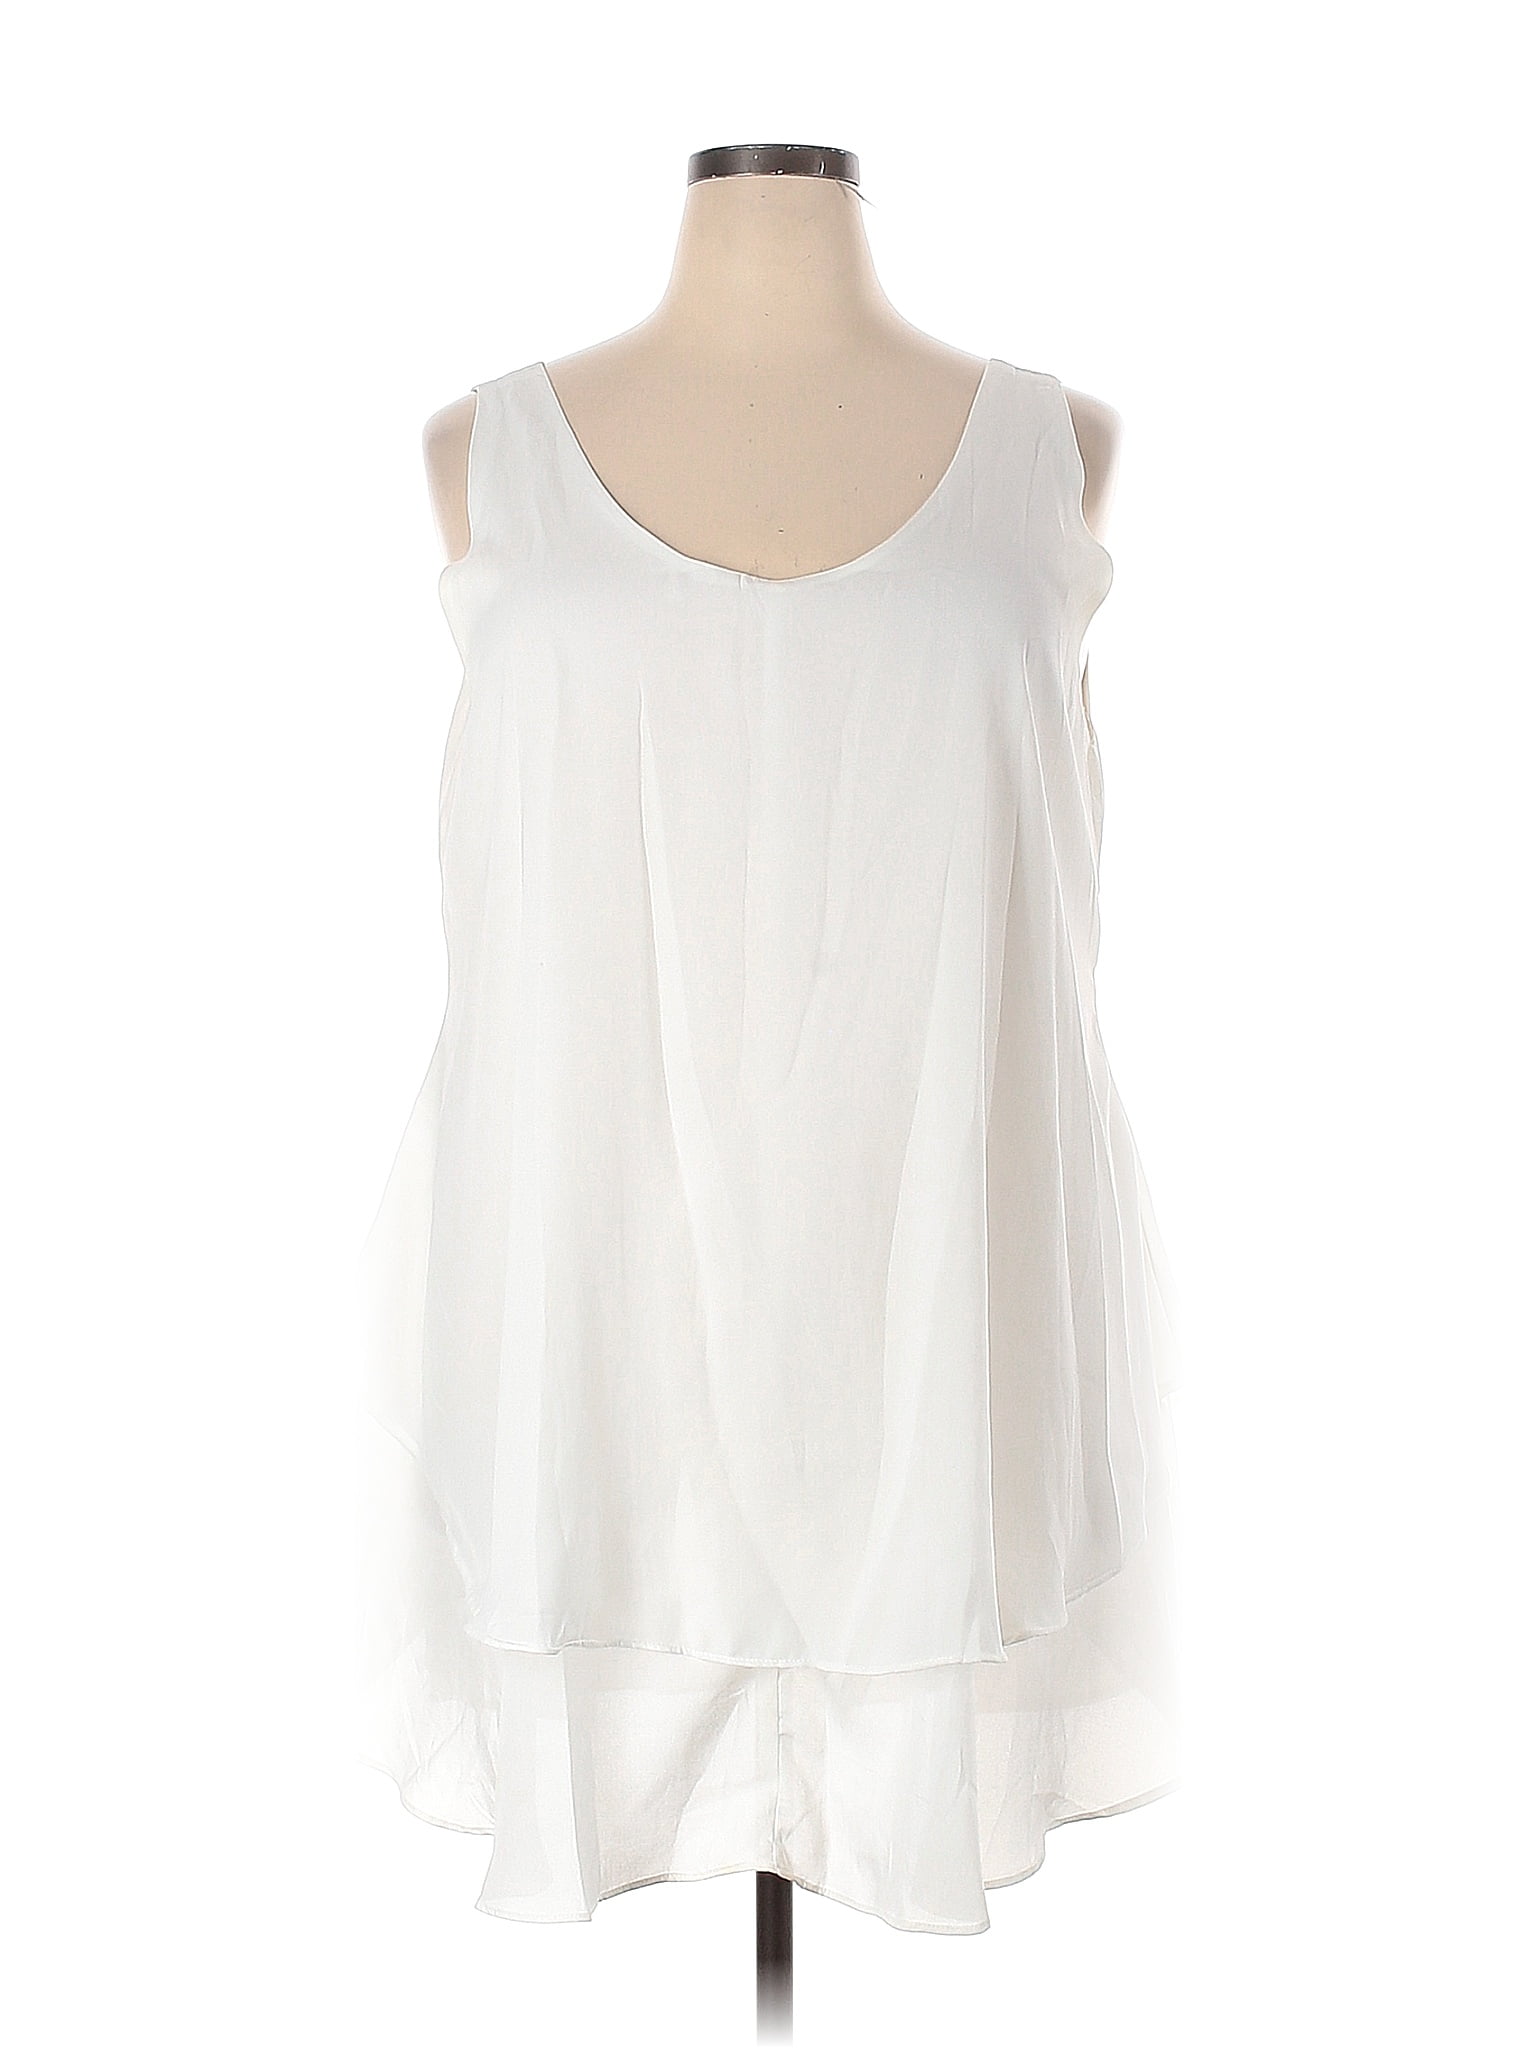 Reborn 100% Polyester Solid White Sleeveless Blouse Size 2X (Plus) - 51 ...